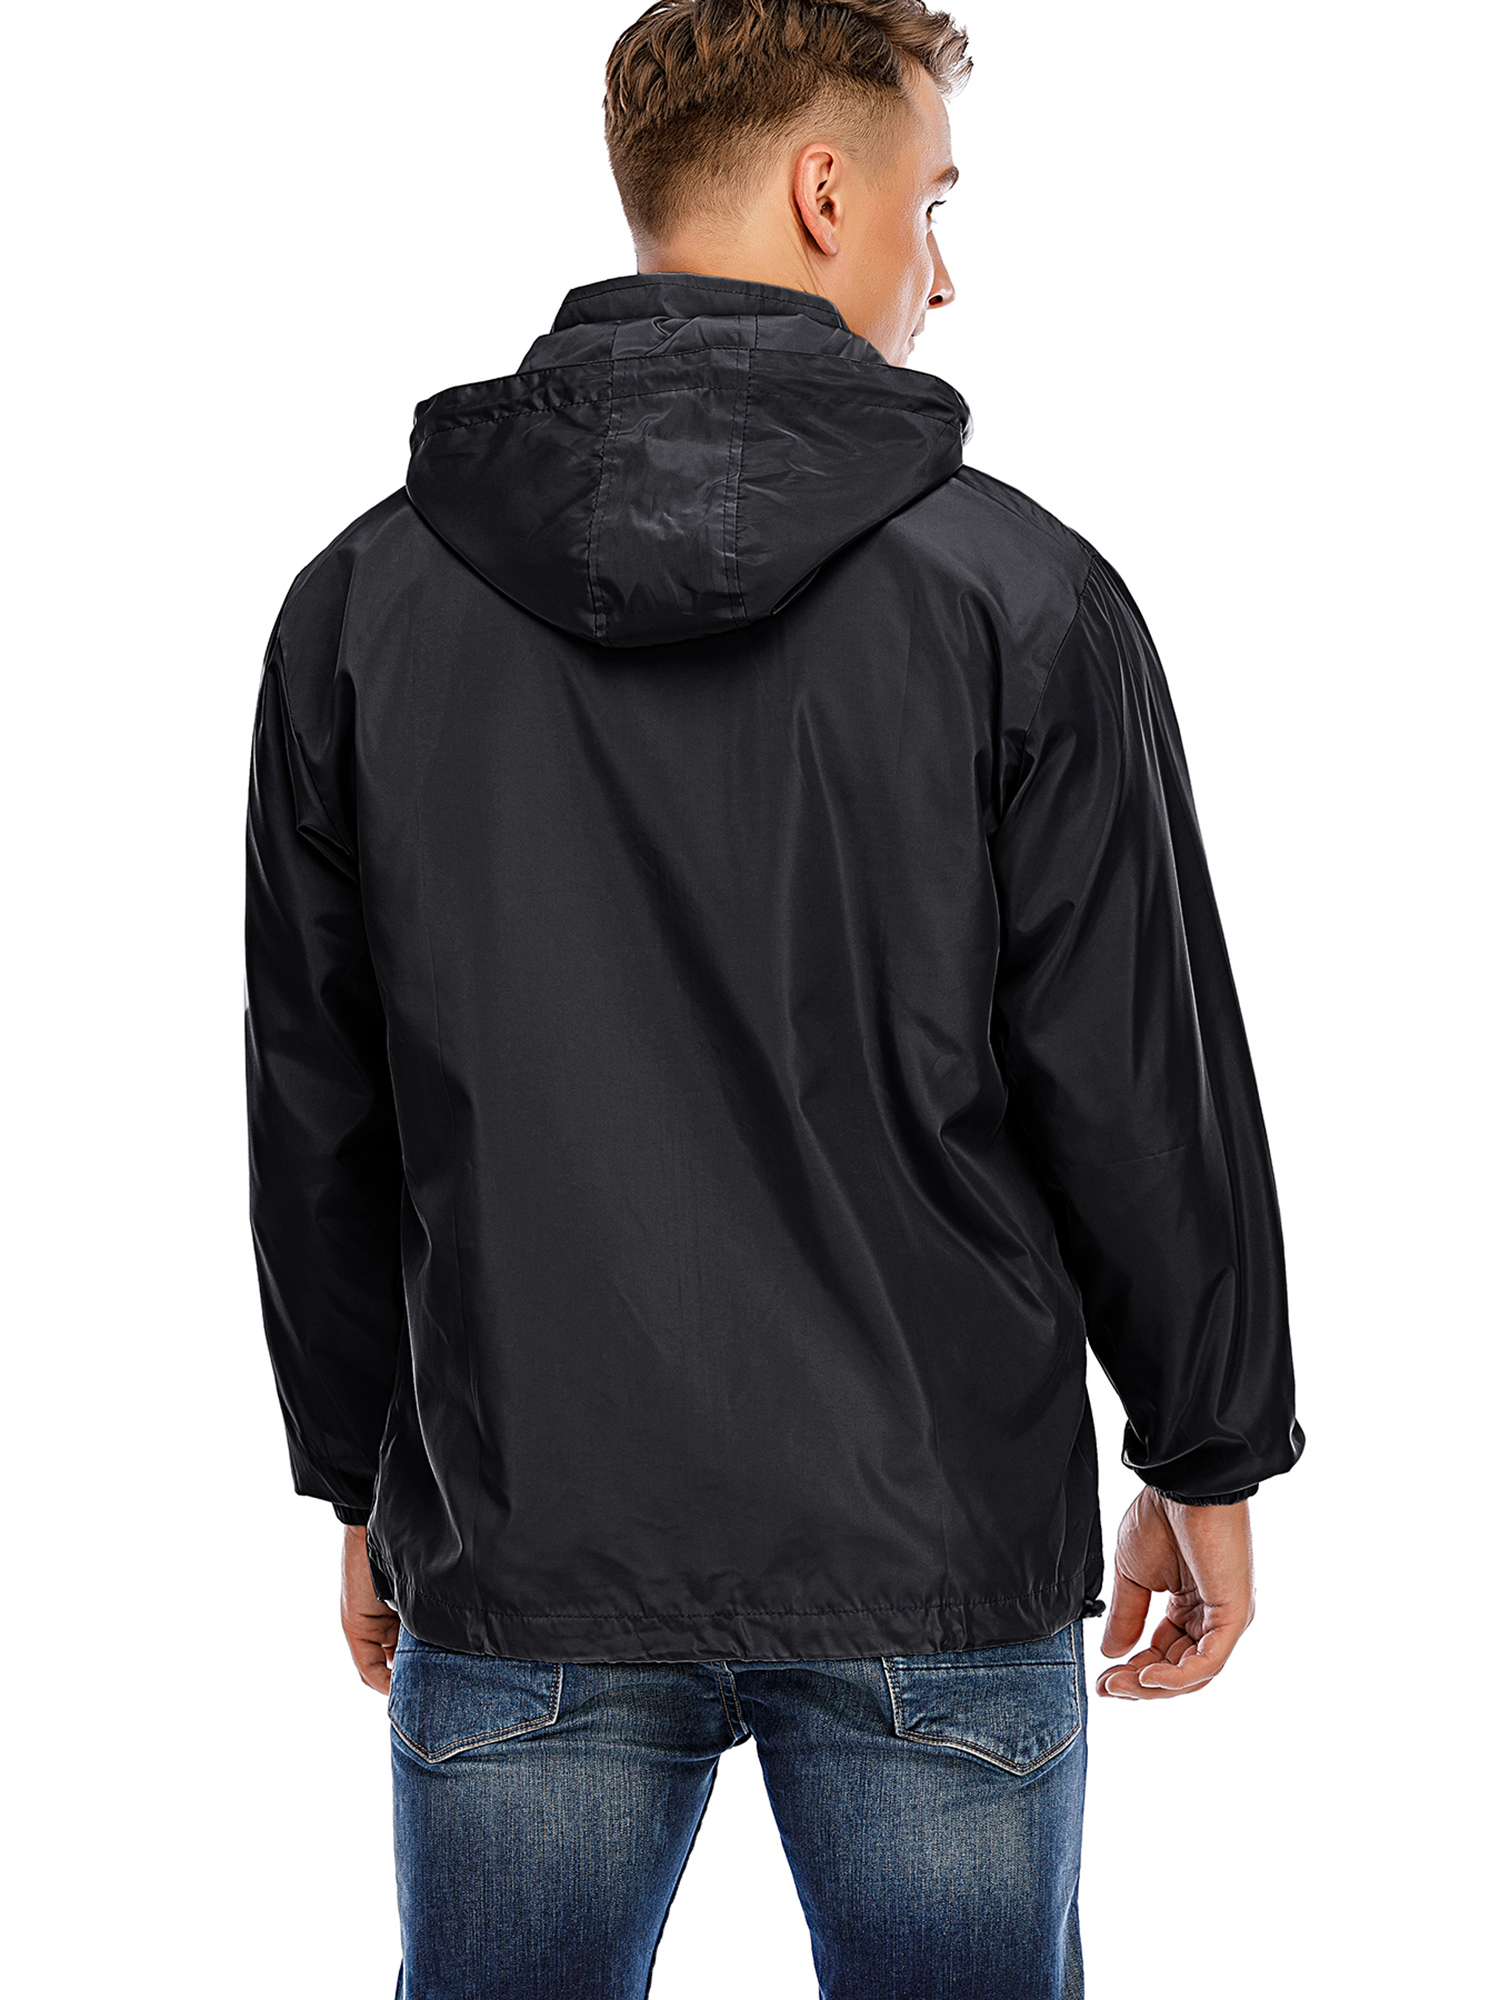 Men's Packable Rain Jacket Outdoor Waterproof Hooded Lightweight Classic Cycling Raincoat Comfortable Casual Windbreaker Rain Jacket - image 2 of 8